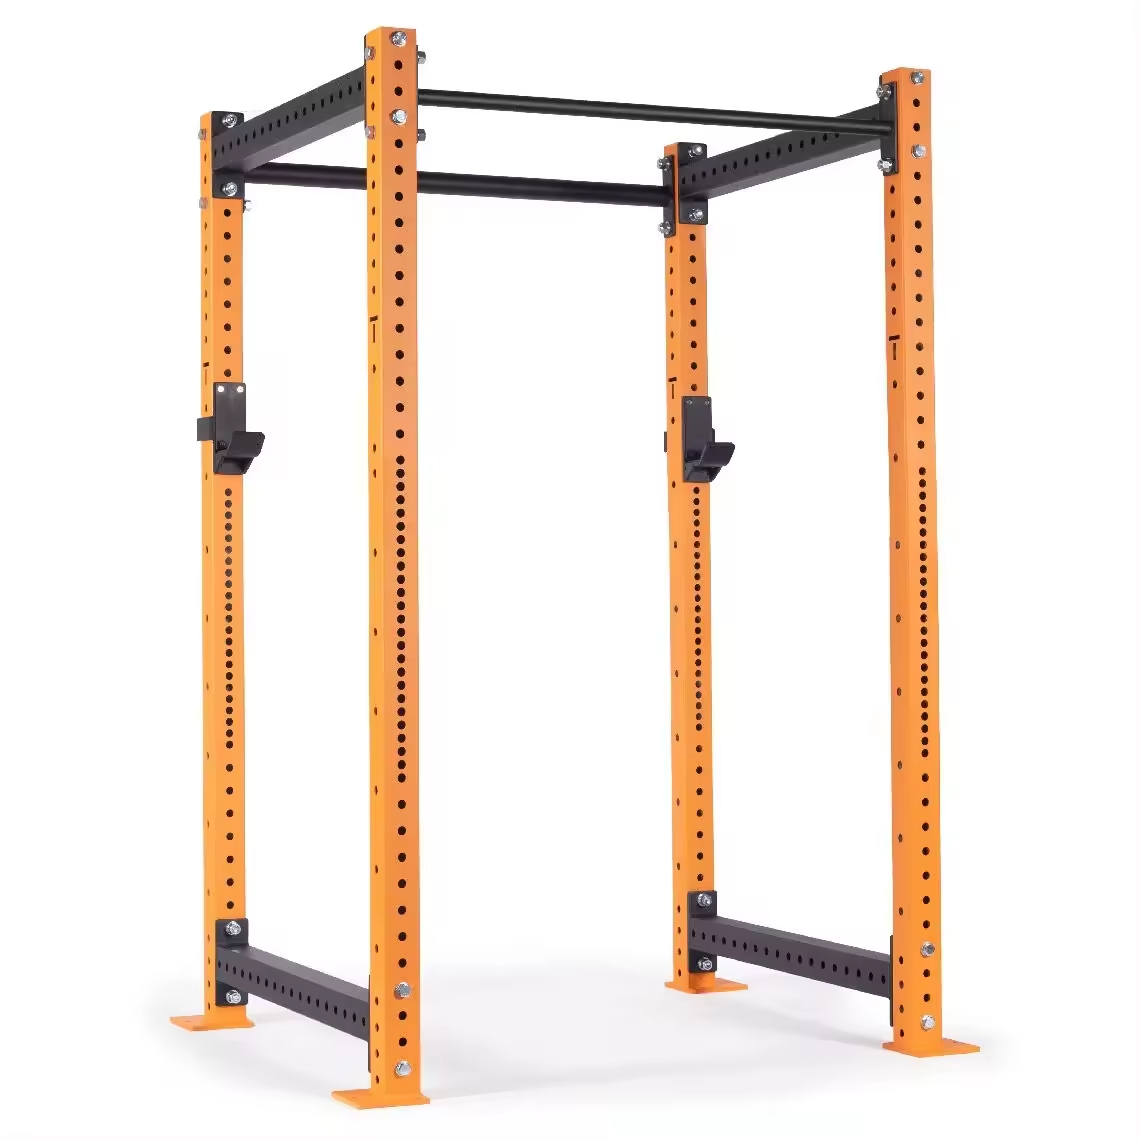 3x3 Gym Fitness Power Rack Squat Rack